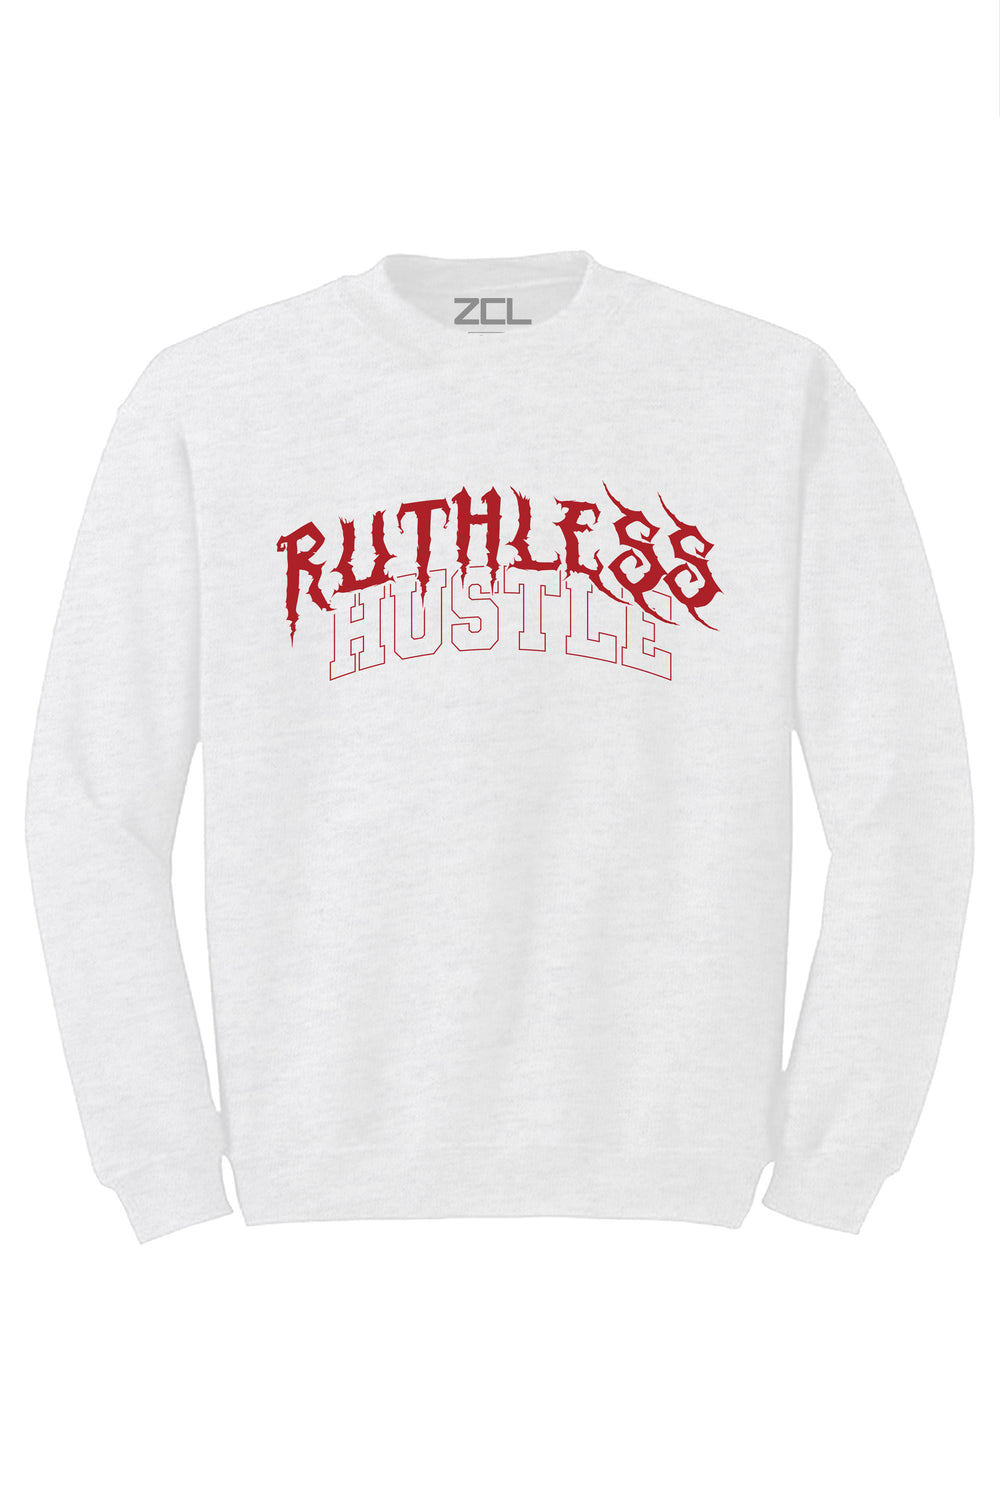 Ruthless Hustle Crewneck Sweatshirt (Red Logo) - Zamage